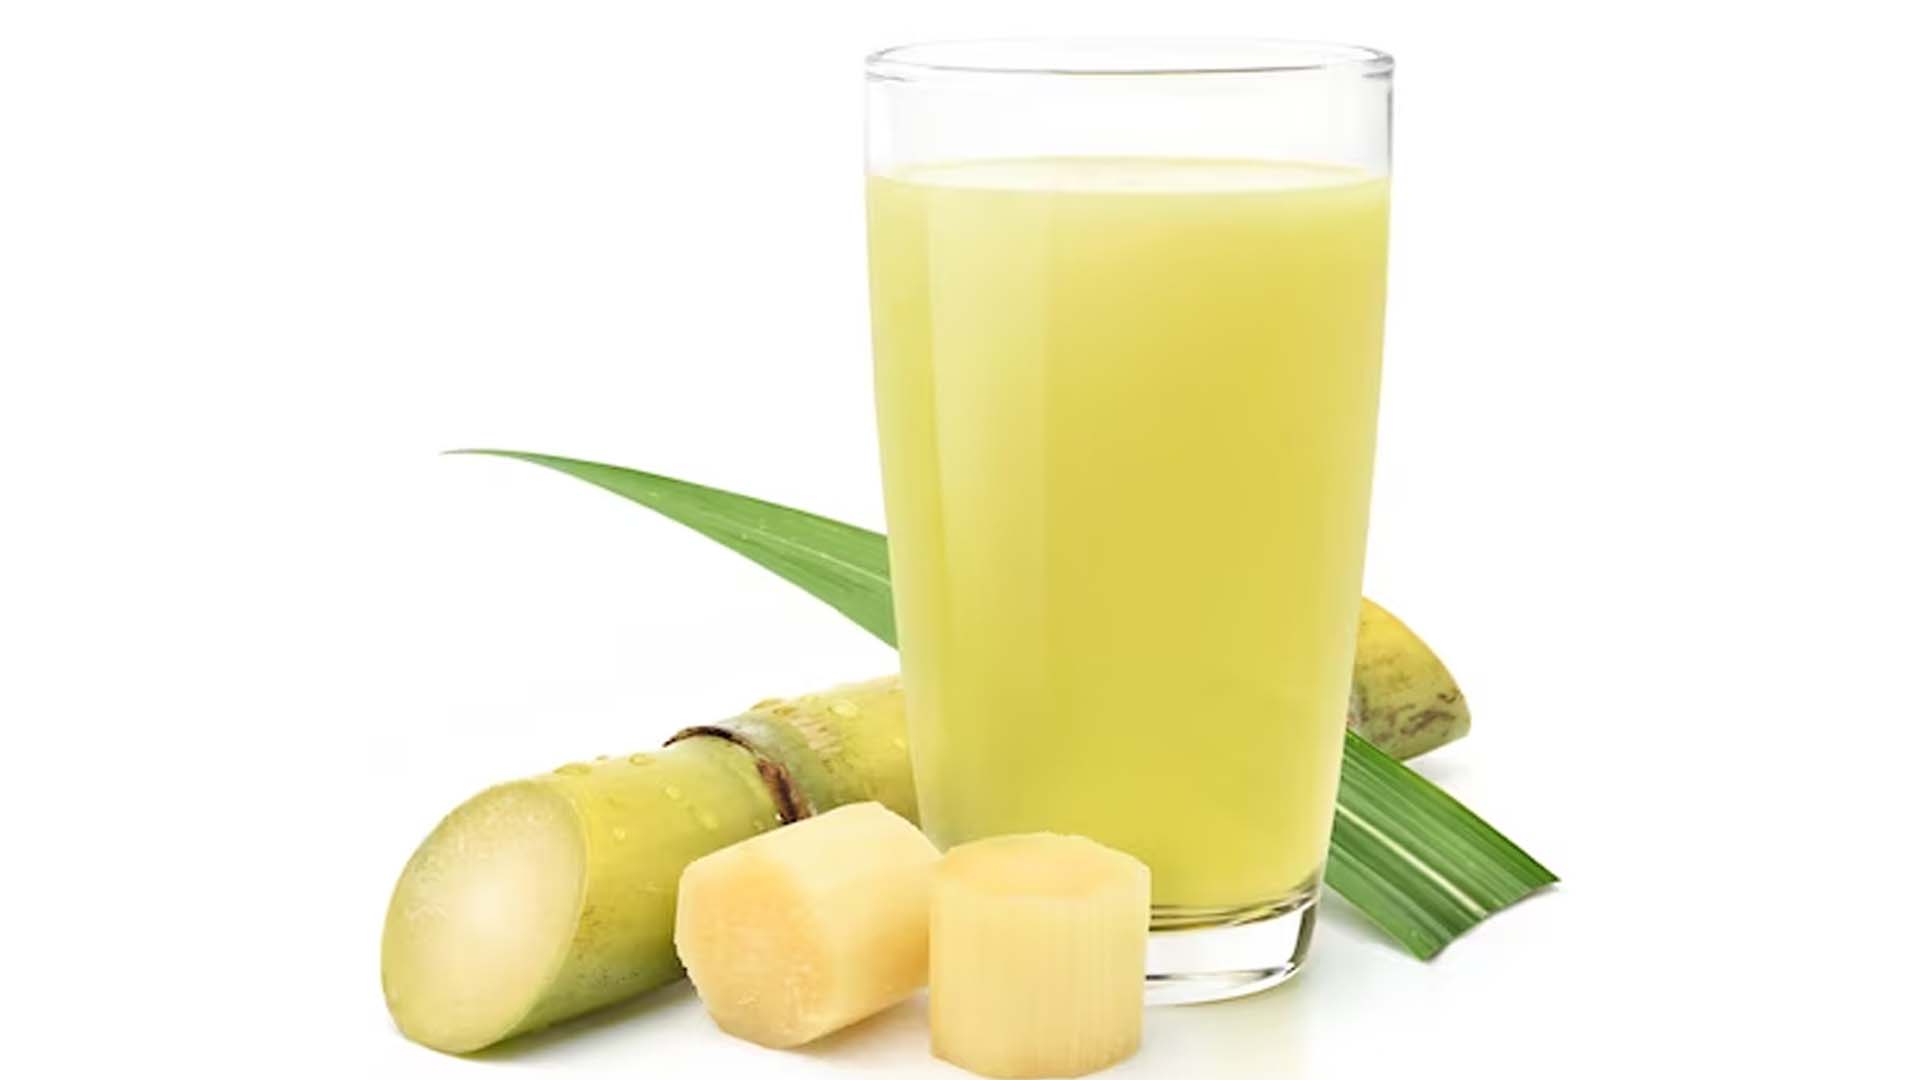 Does Sugarcane Juice Cause Heat?